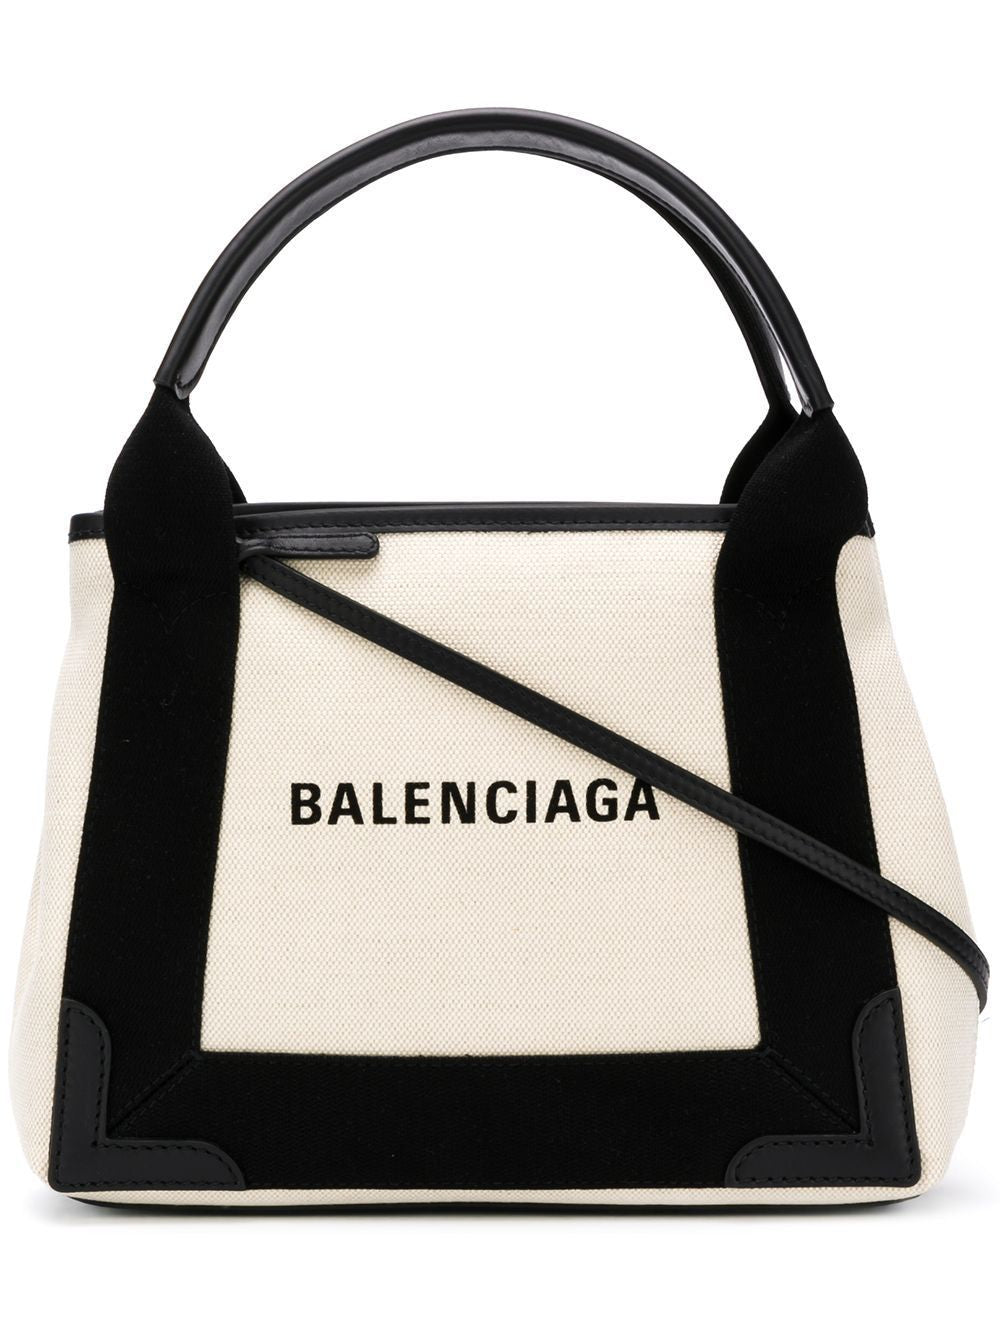 BALENCIAGA Multicolored Calf Leather and Canvas Tote Handbag for Women